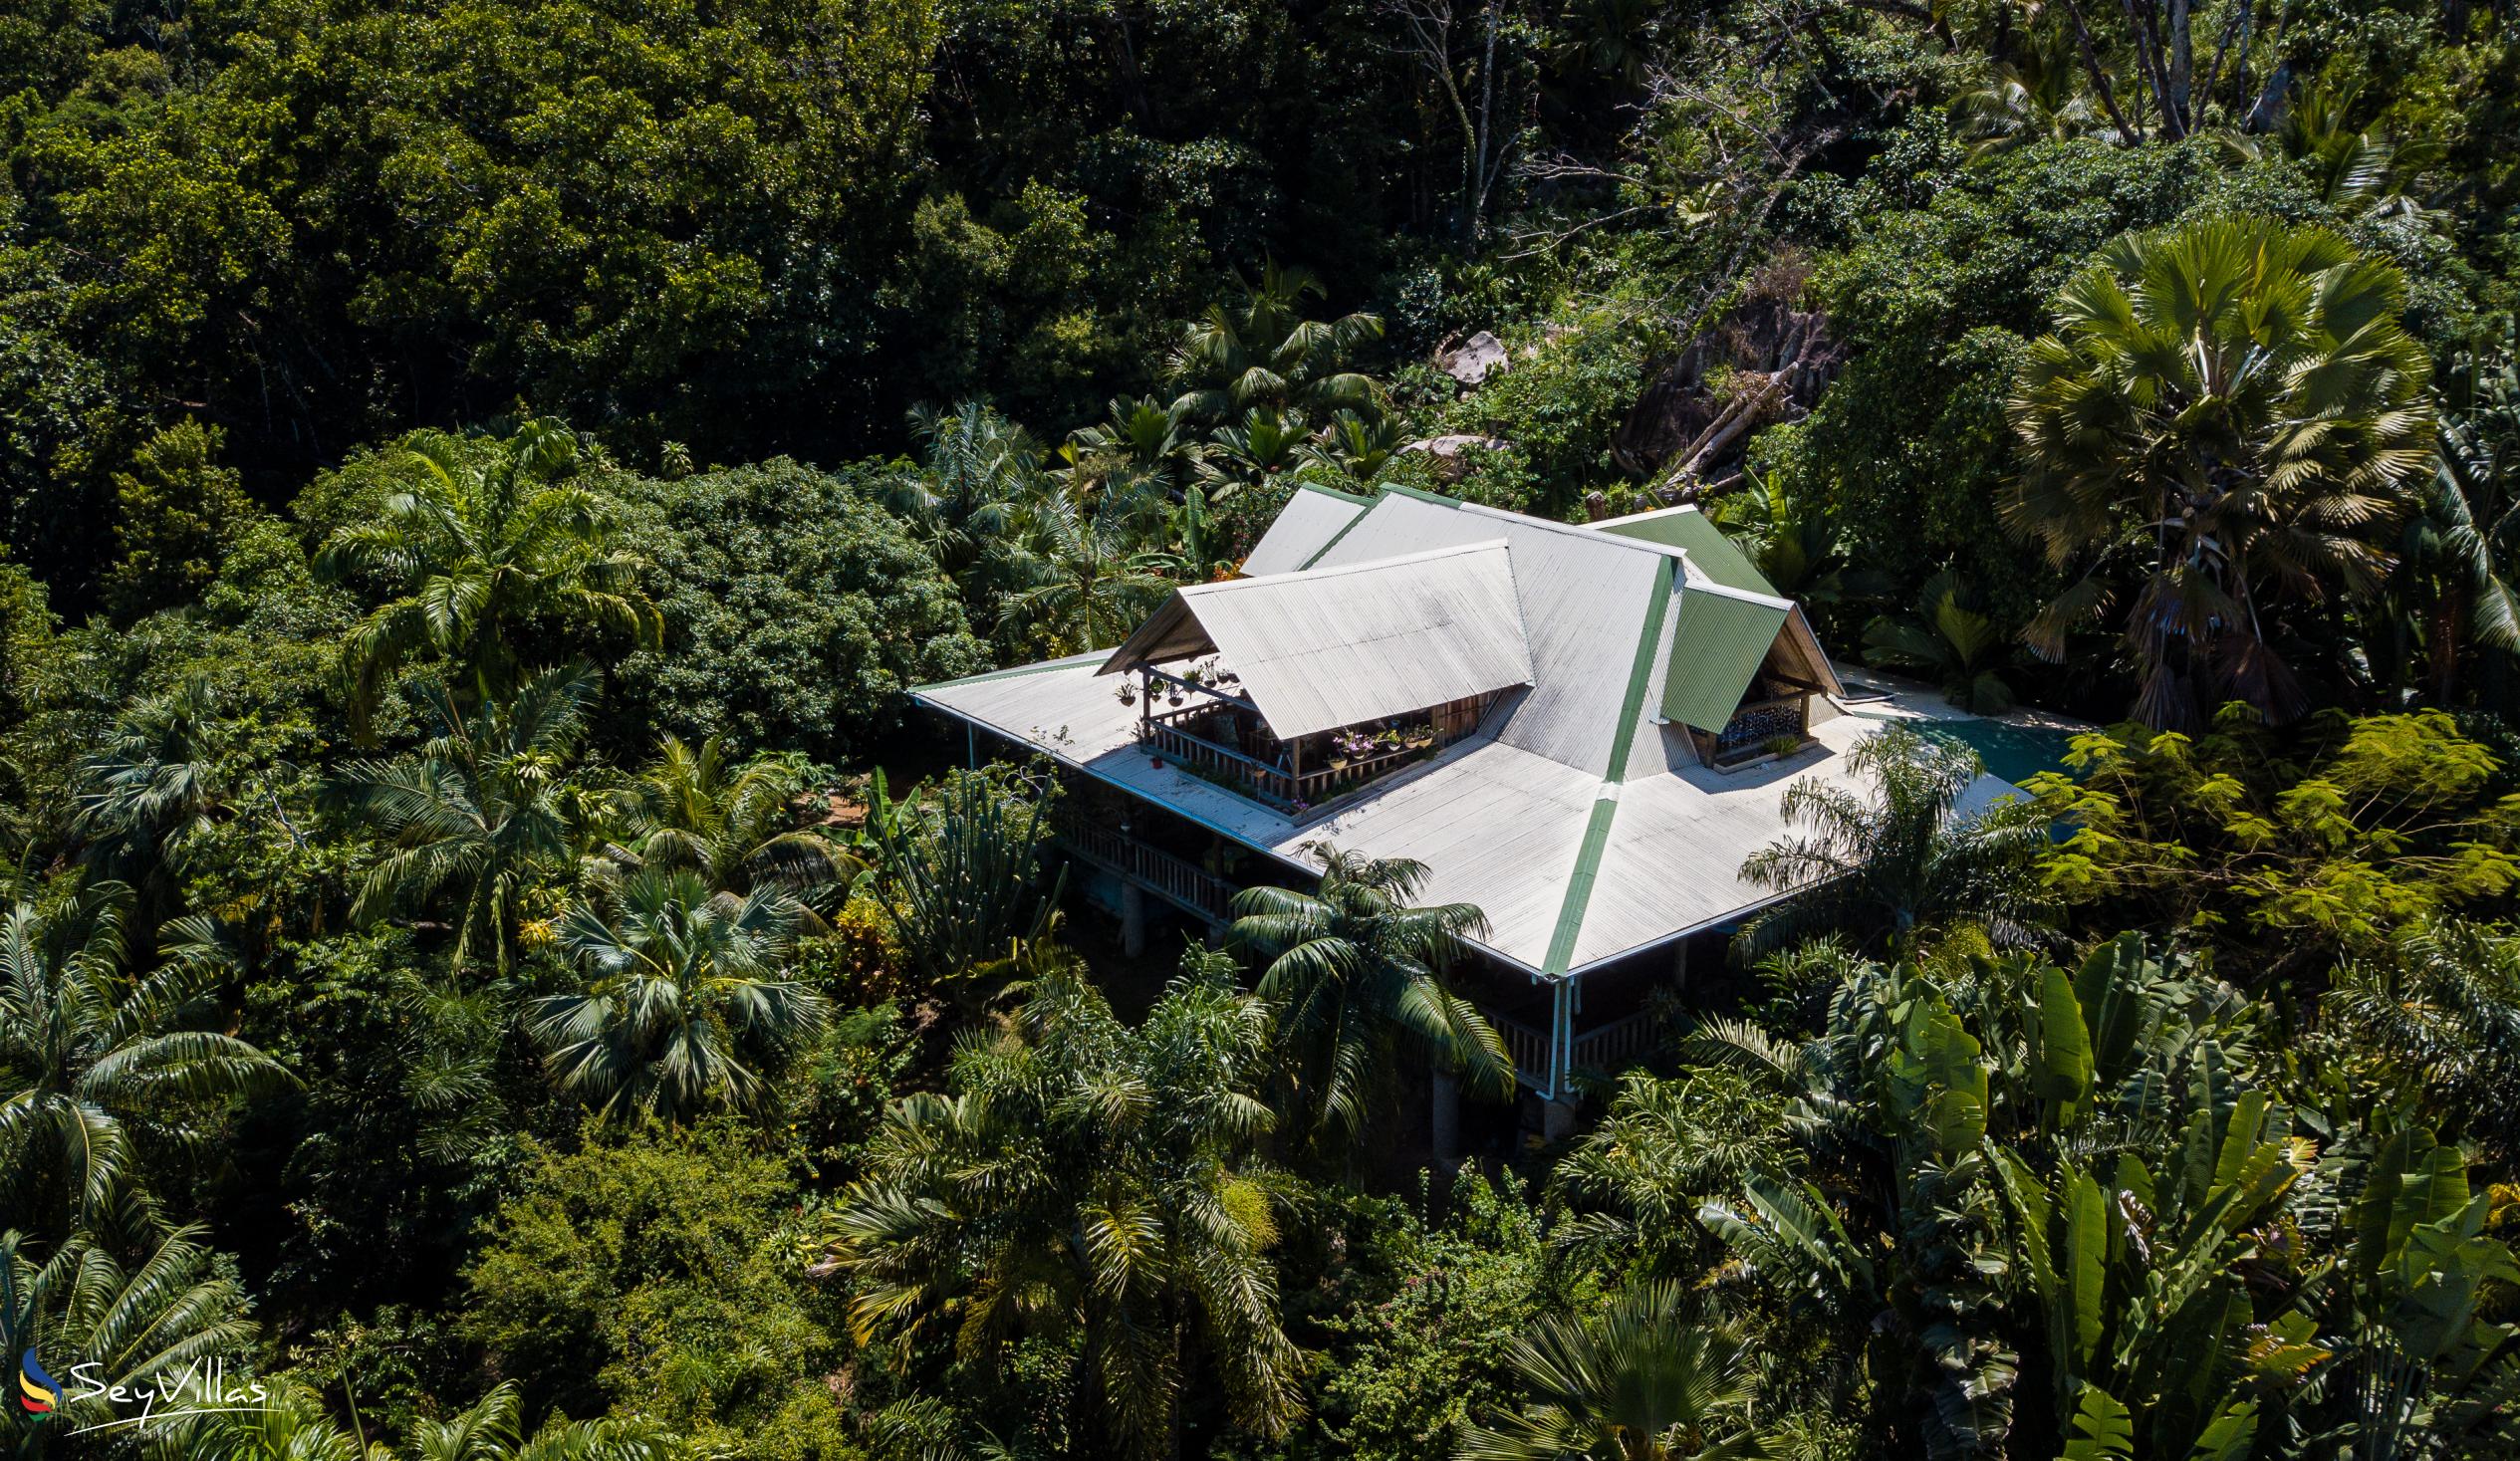 Photo 5: Secret Villa - Outdoor area - La Digue (Seychelles)